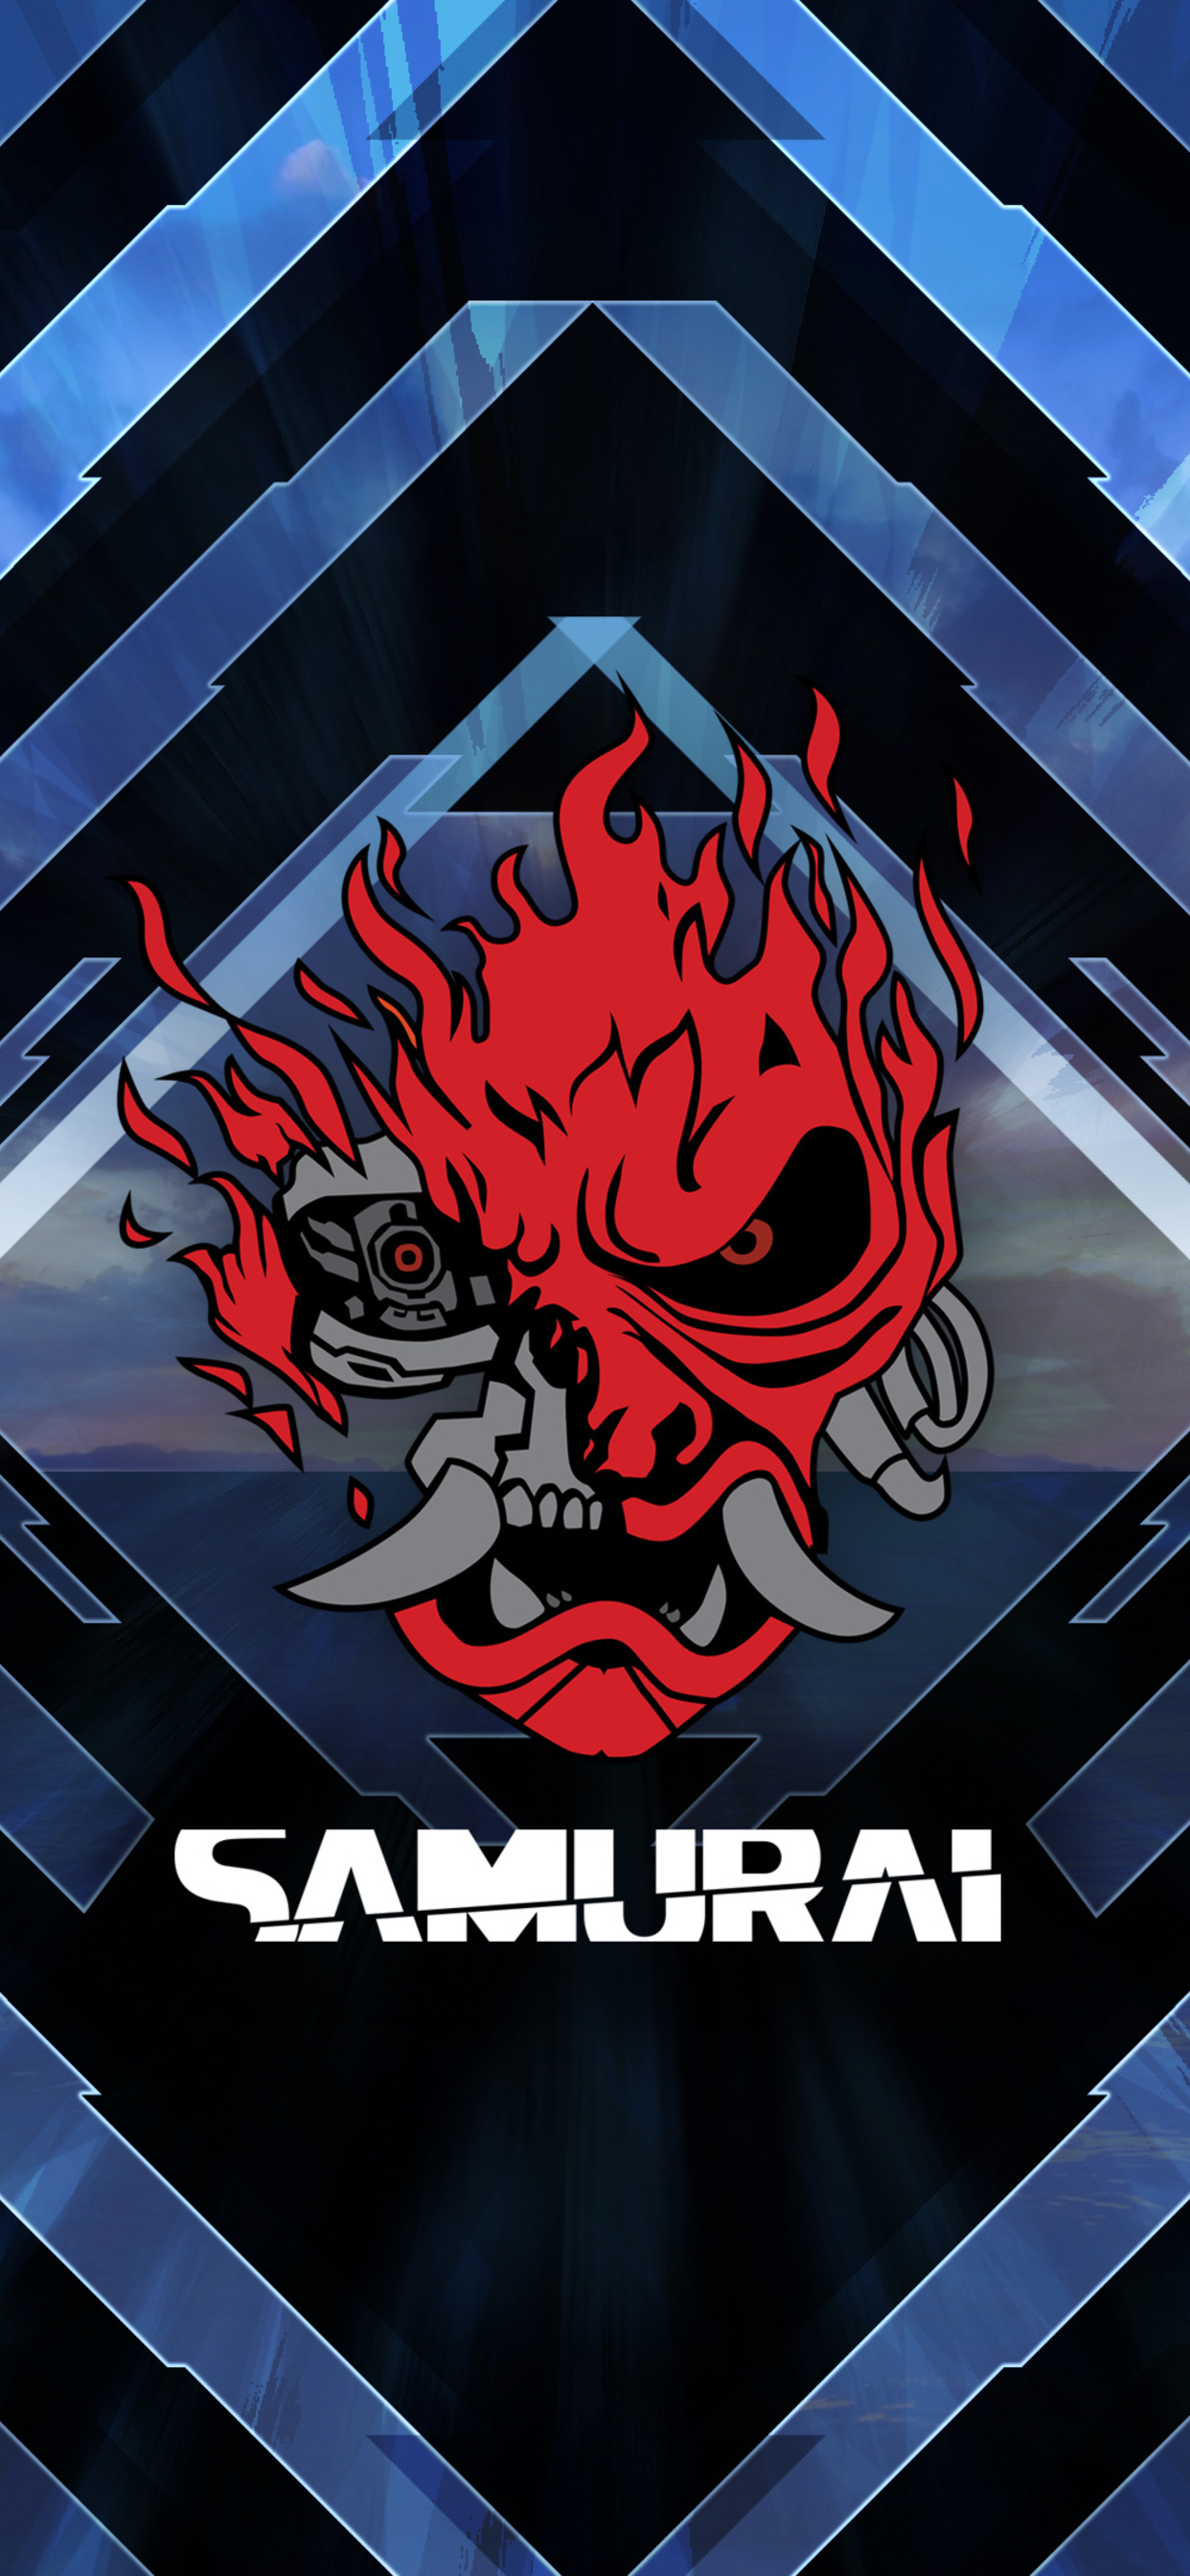 Cyberpunk Samurai Logo 4k iPhone XS MAX HD 4k Wallpaper, Image, Background, Photo and Picture